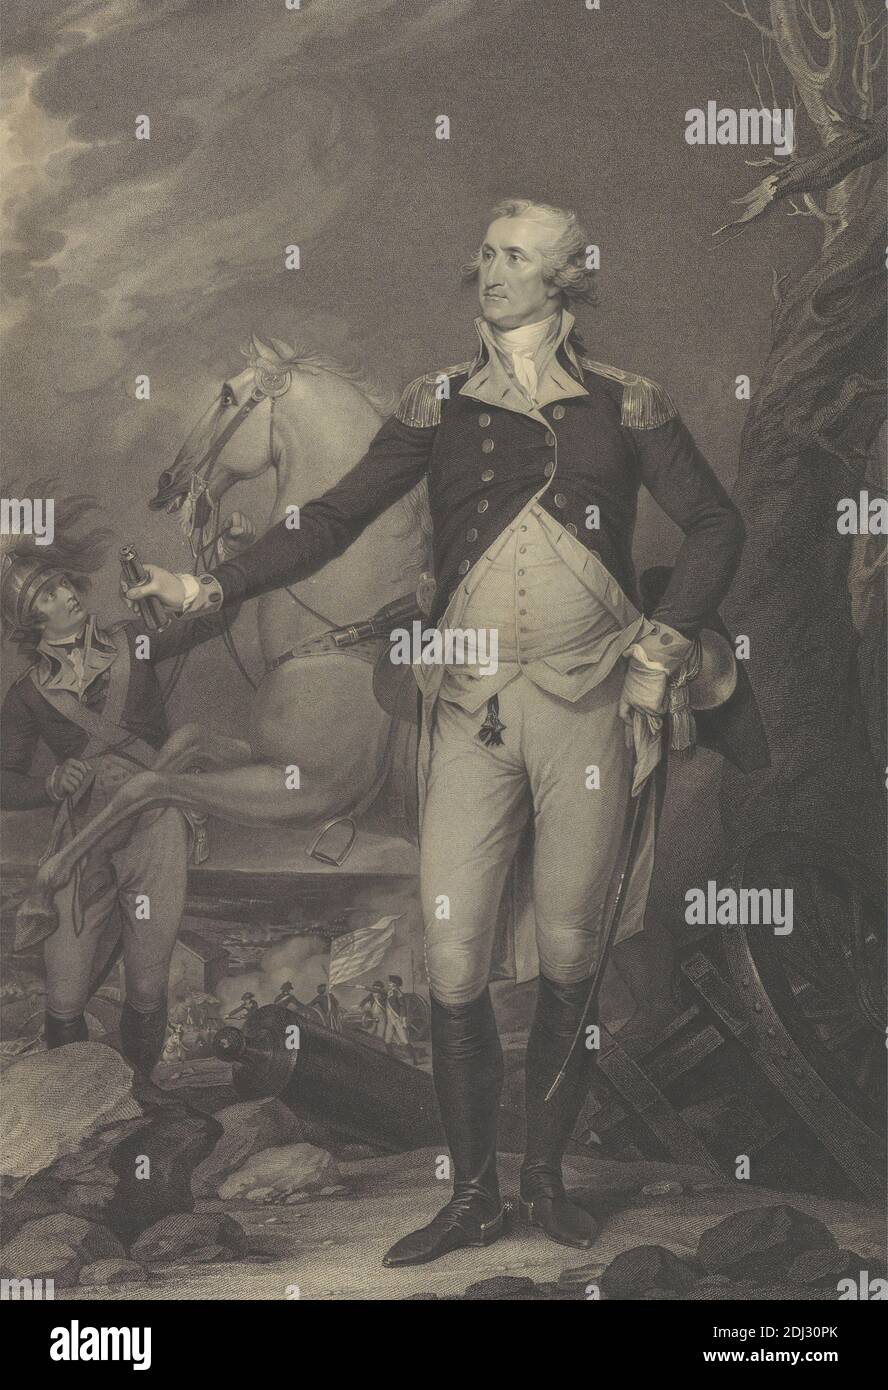 George Washington bei der Schlacht von Trenton, John Cheesman, 18–19. jh., nach John Trumbull, 1756–1843, Amerikaner, 1795, Graving in stipple Stockfoto